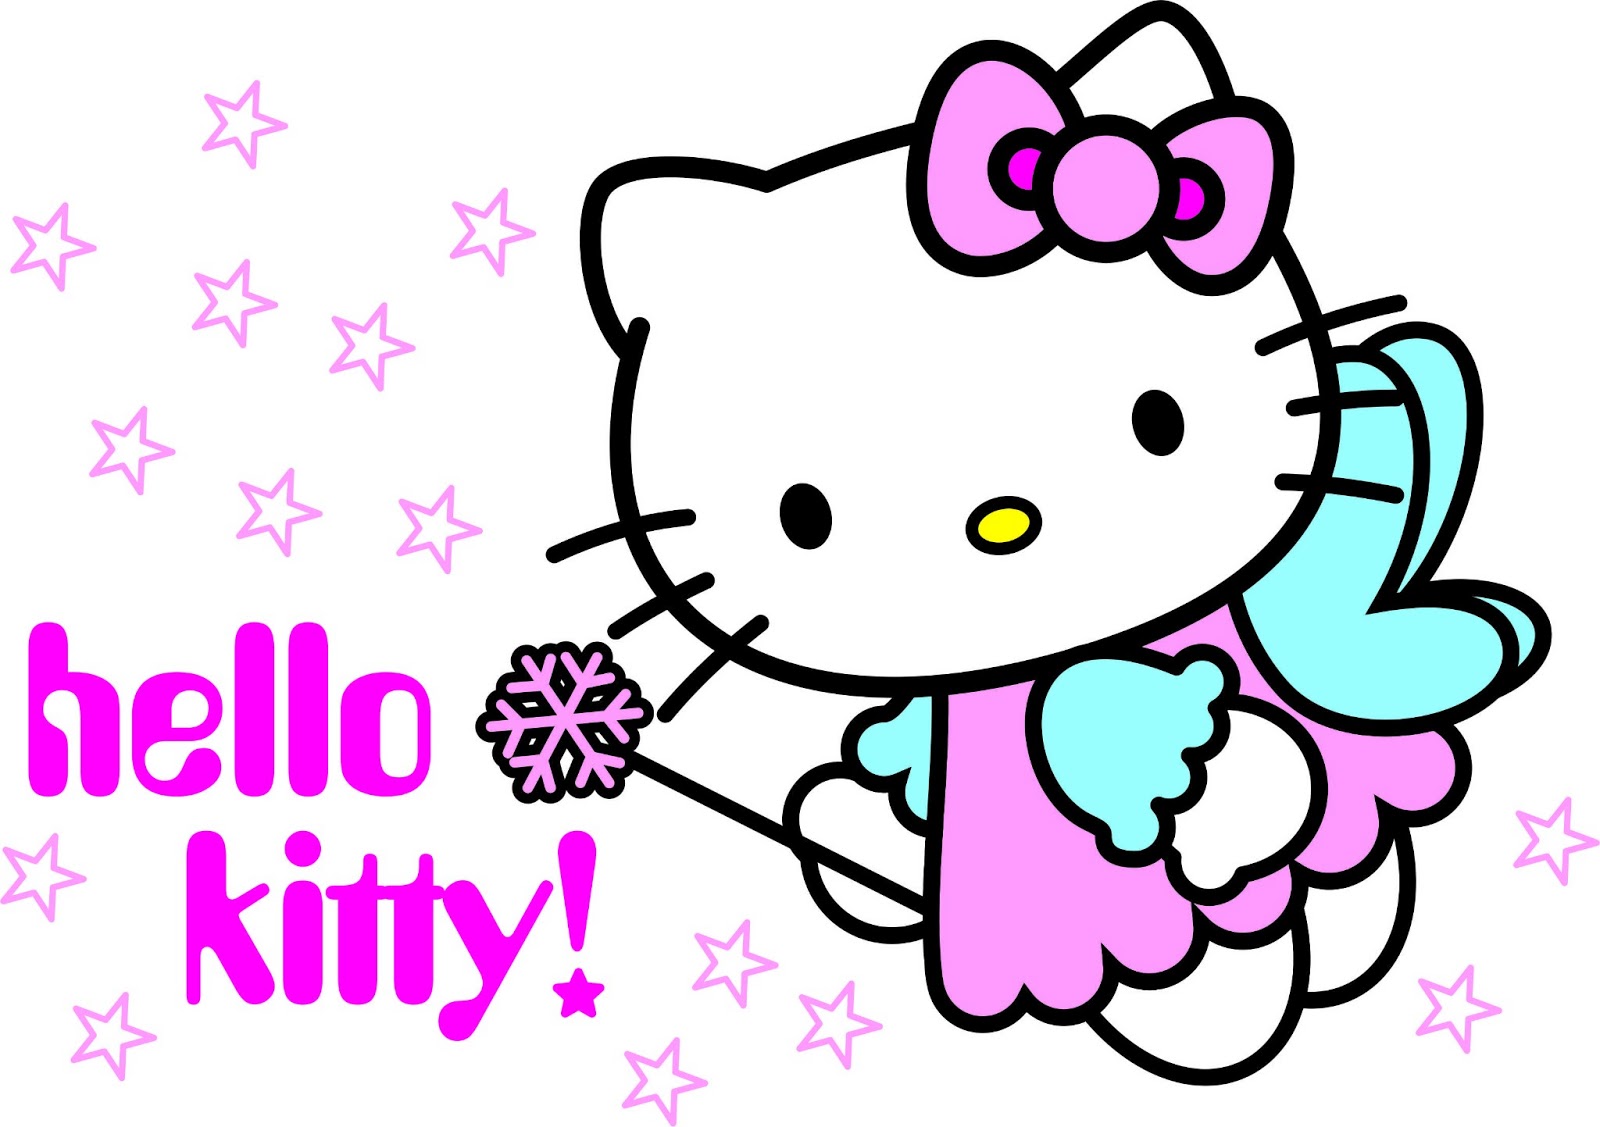 Hello kitty clipart free download - ClipartFox